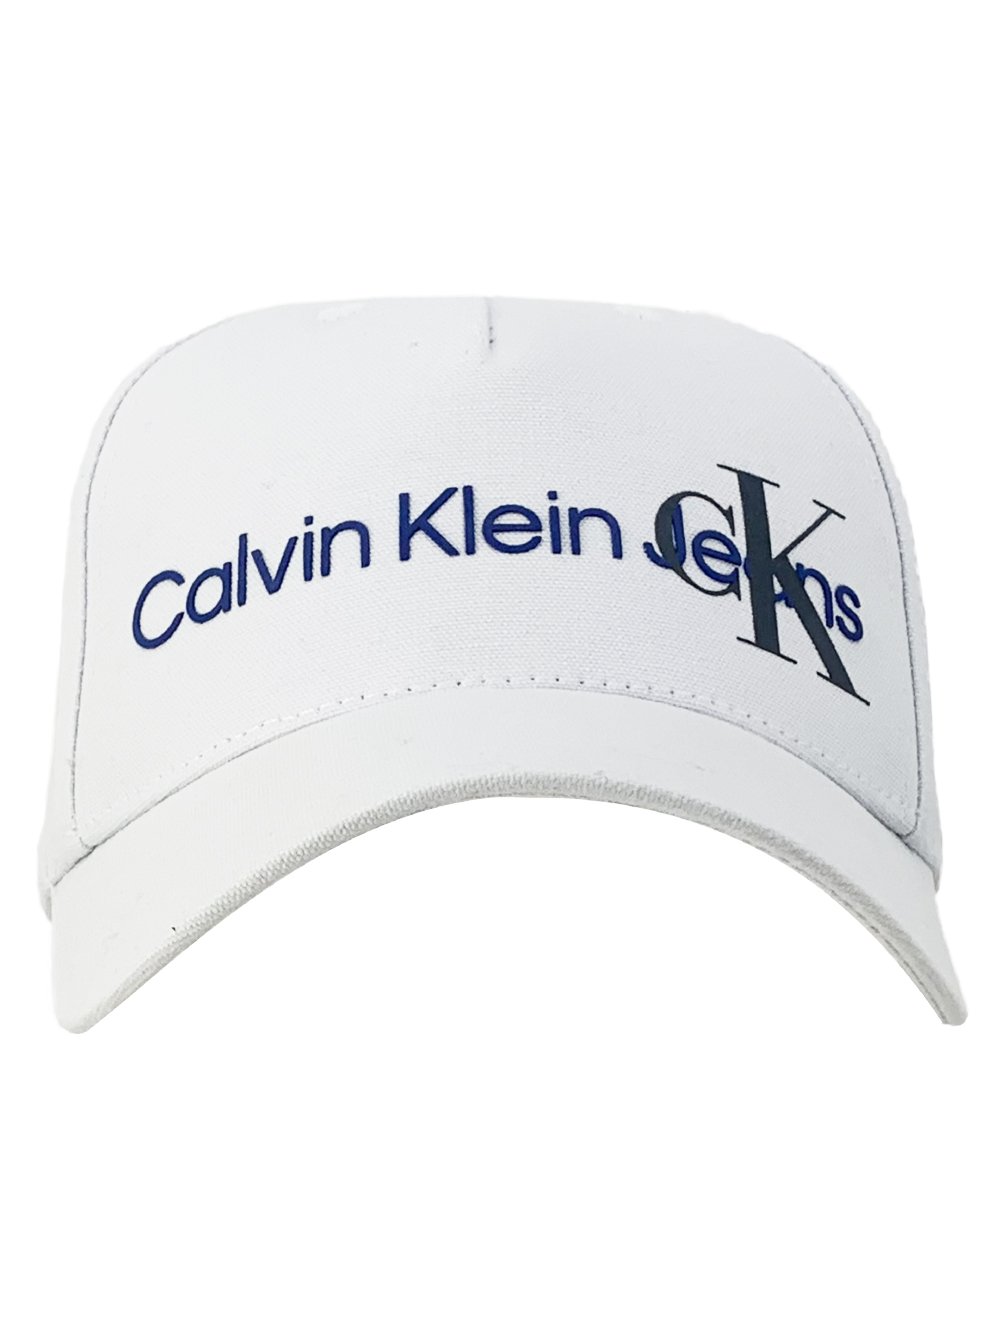 Boné Calvin Klein Jeans Sarja Rubber Logo Branco